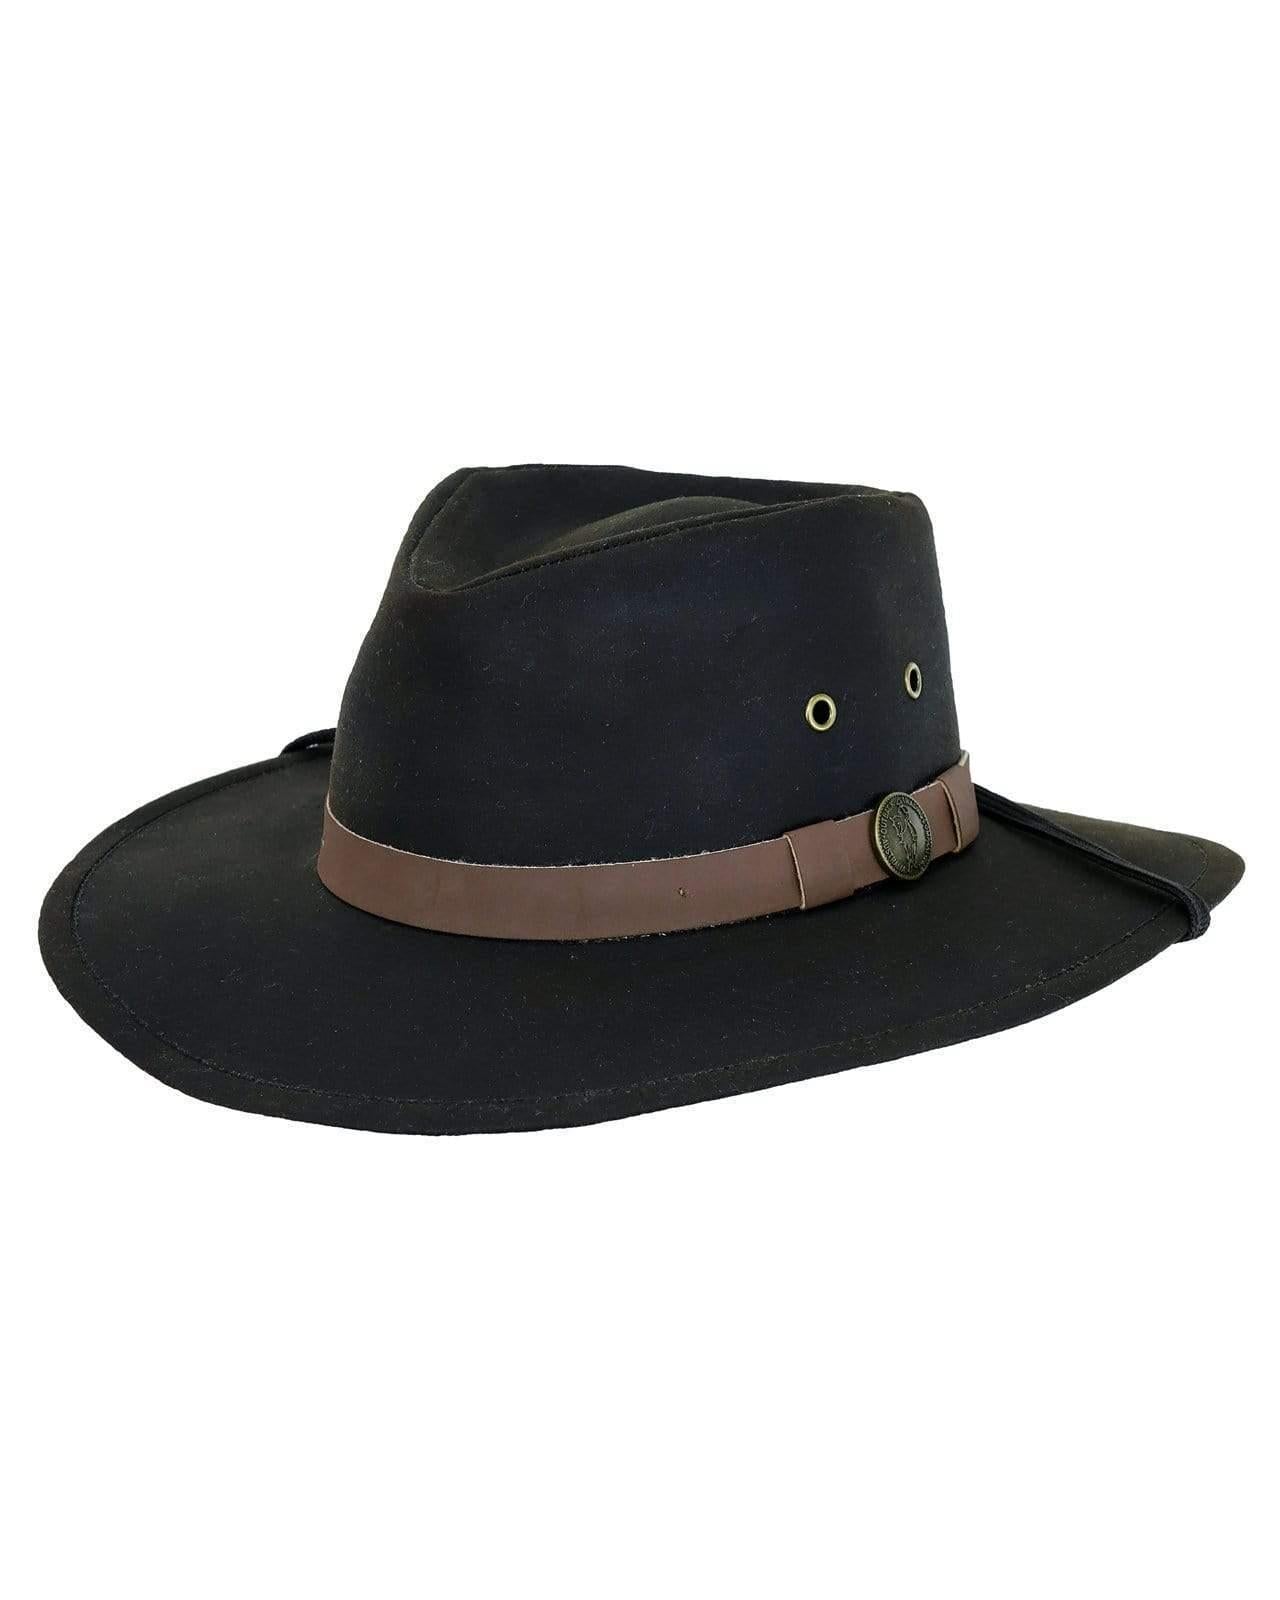 Kodiak Cowboy Hat